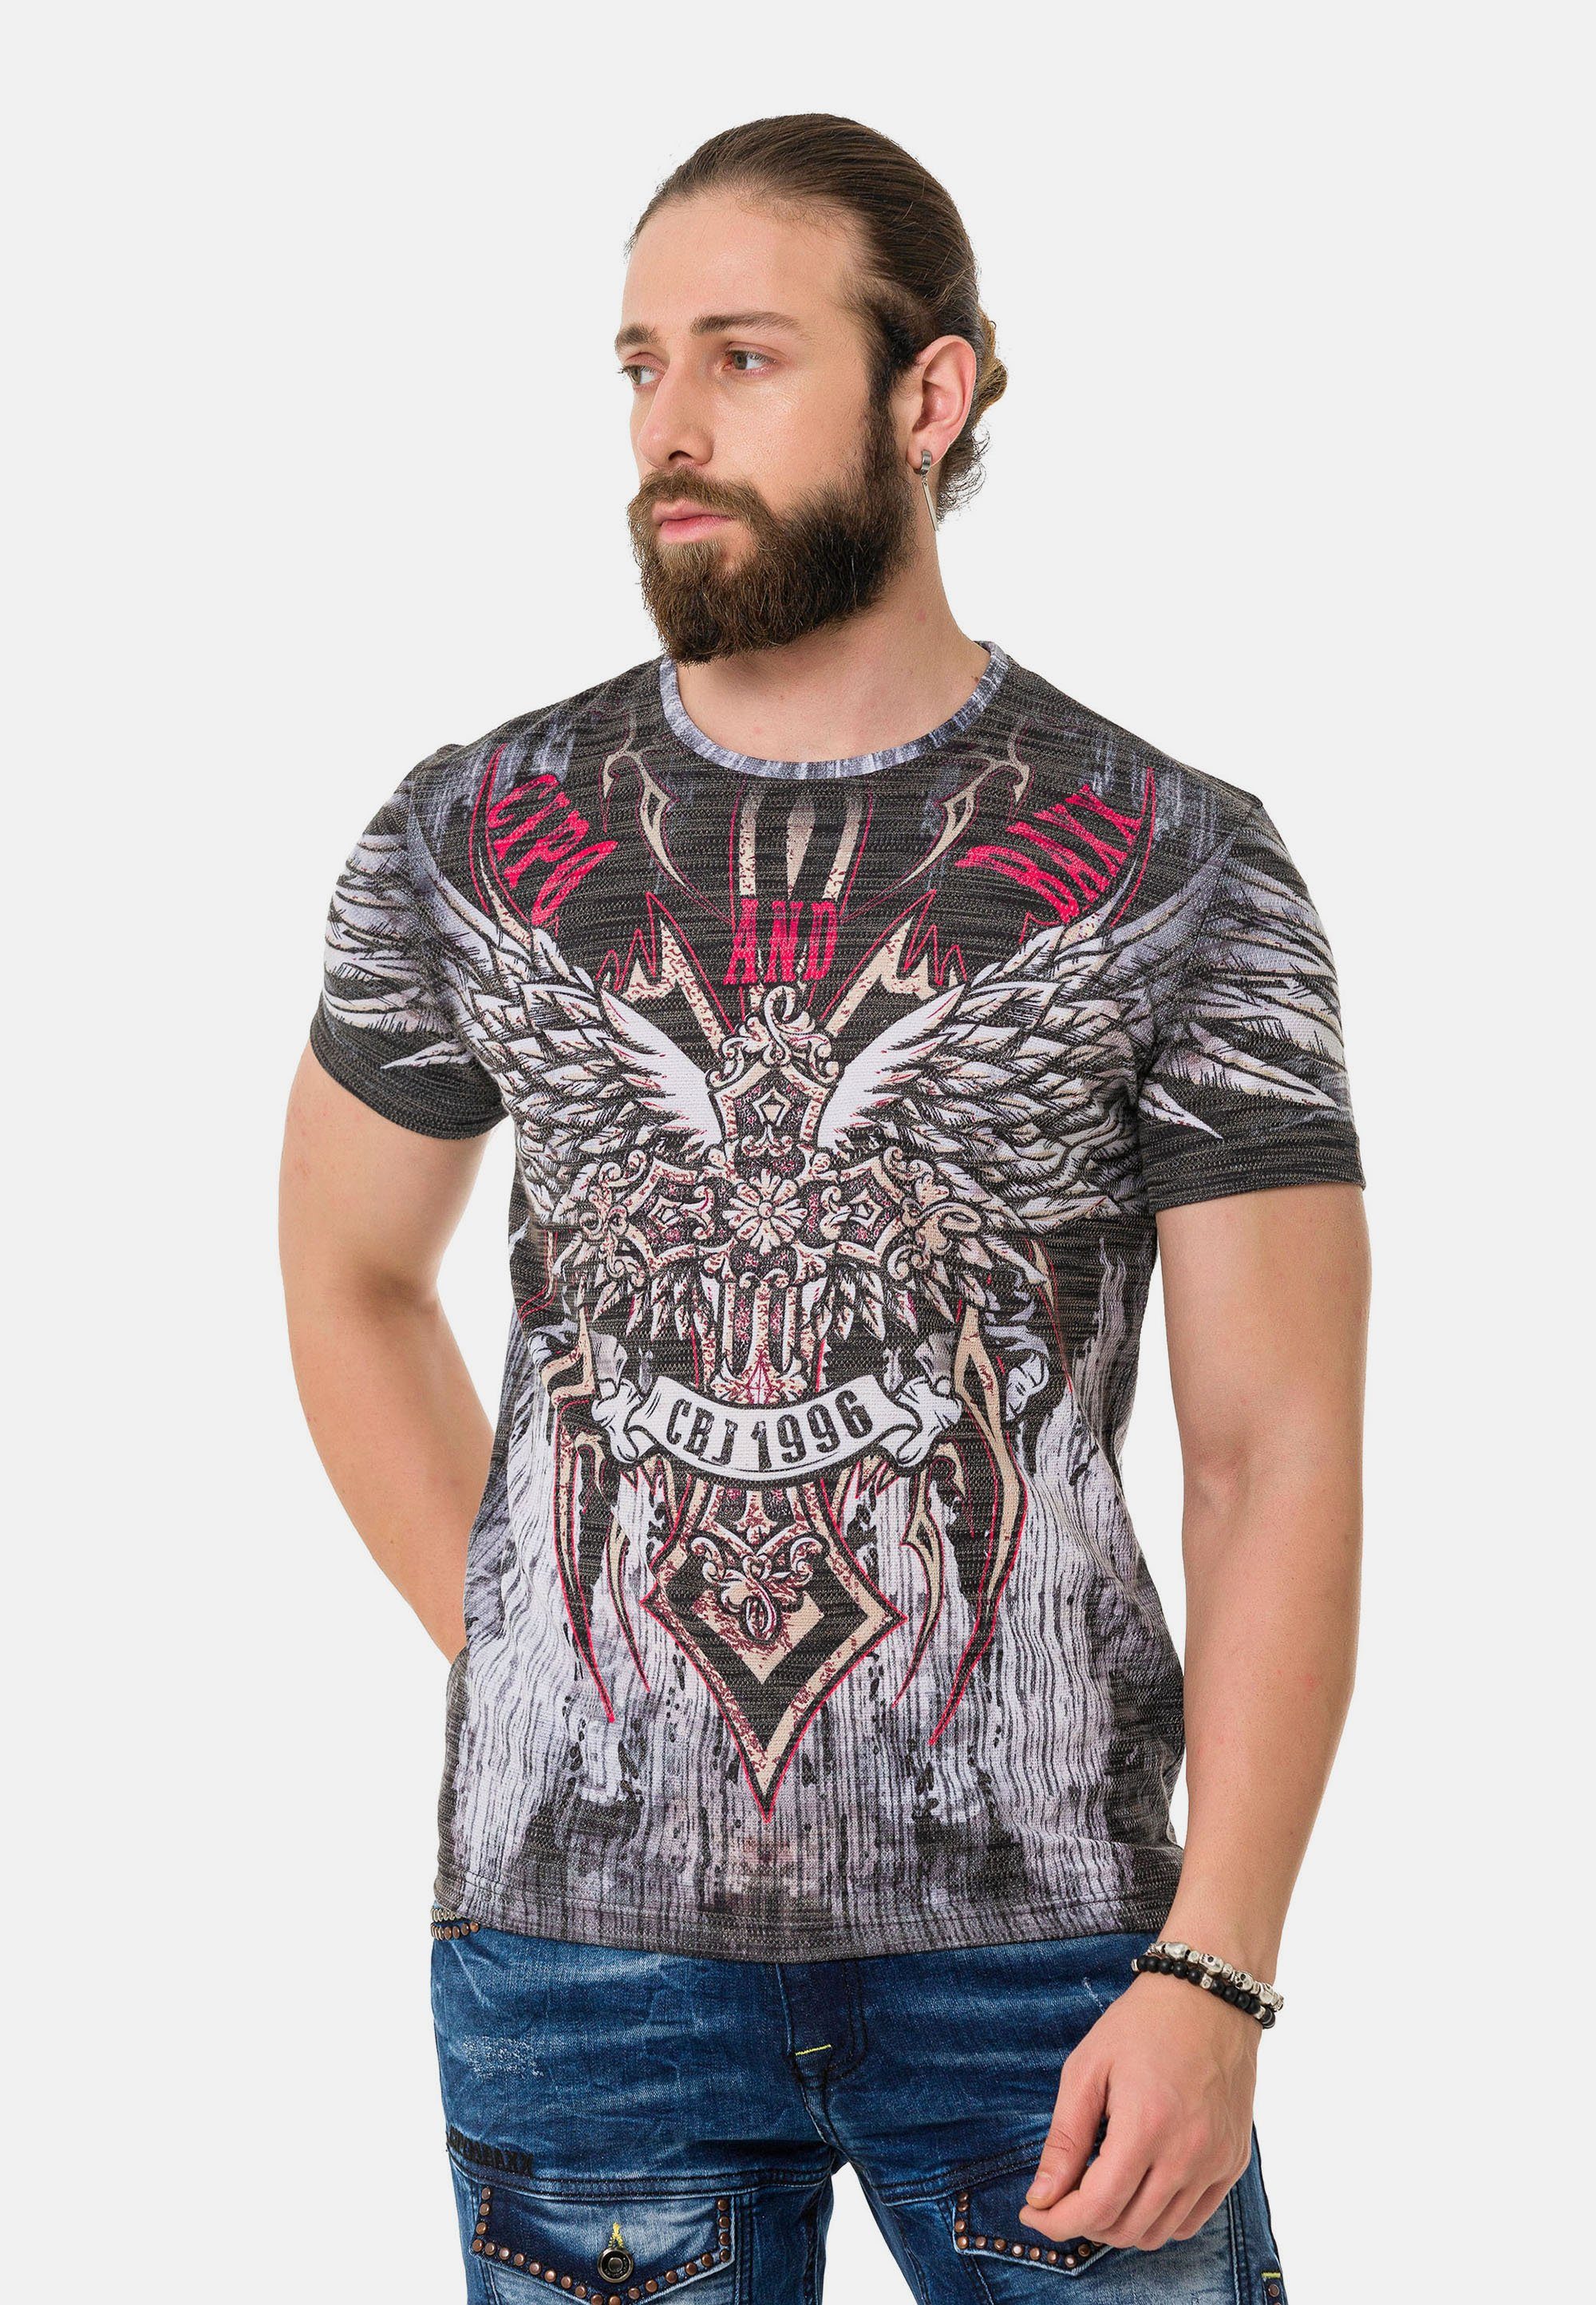 & Full-Print-Design trendigen T-Shirt Baxx im Cipo